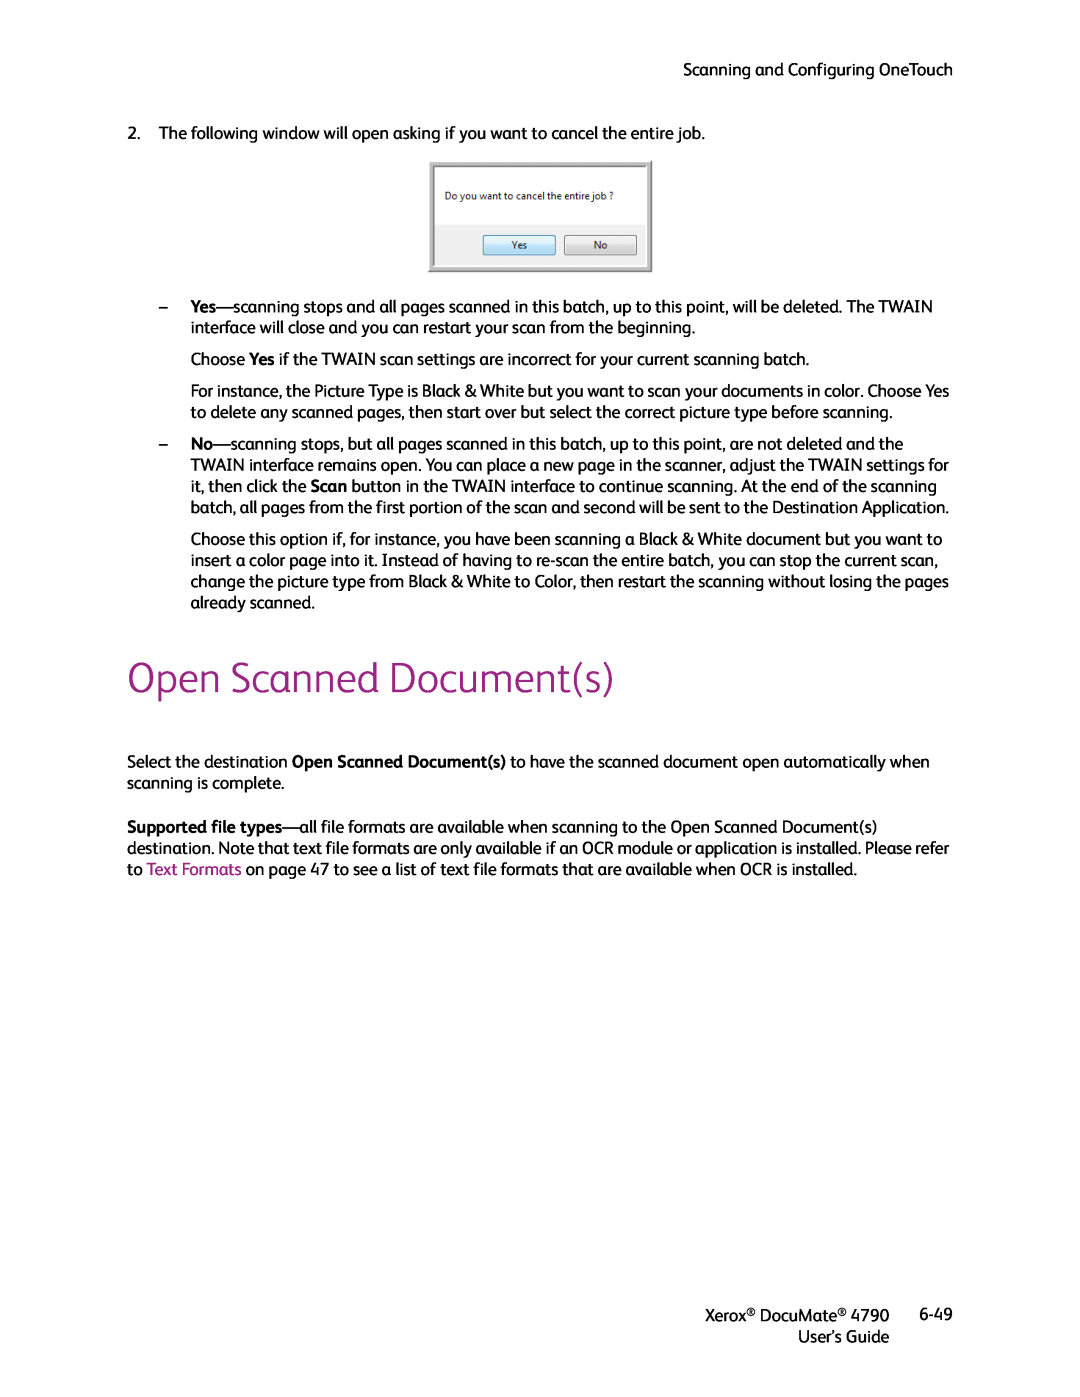 Xerox xerox documate manual Open Scanned Documents 